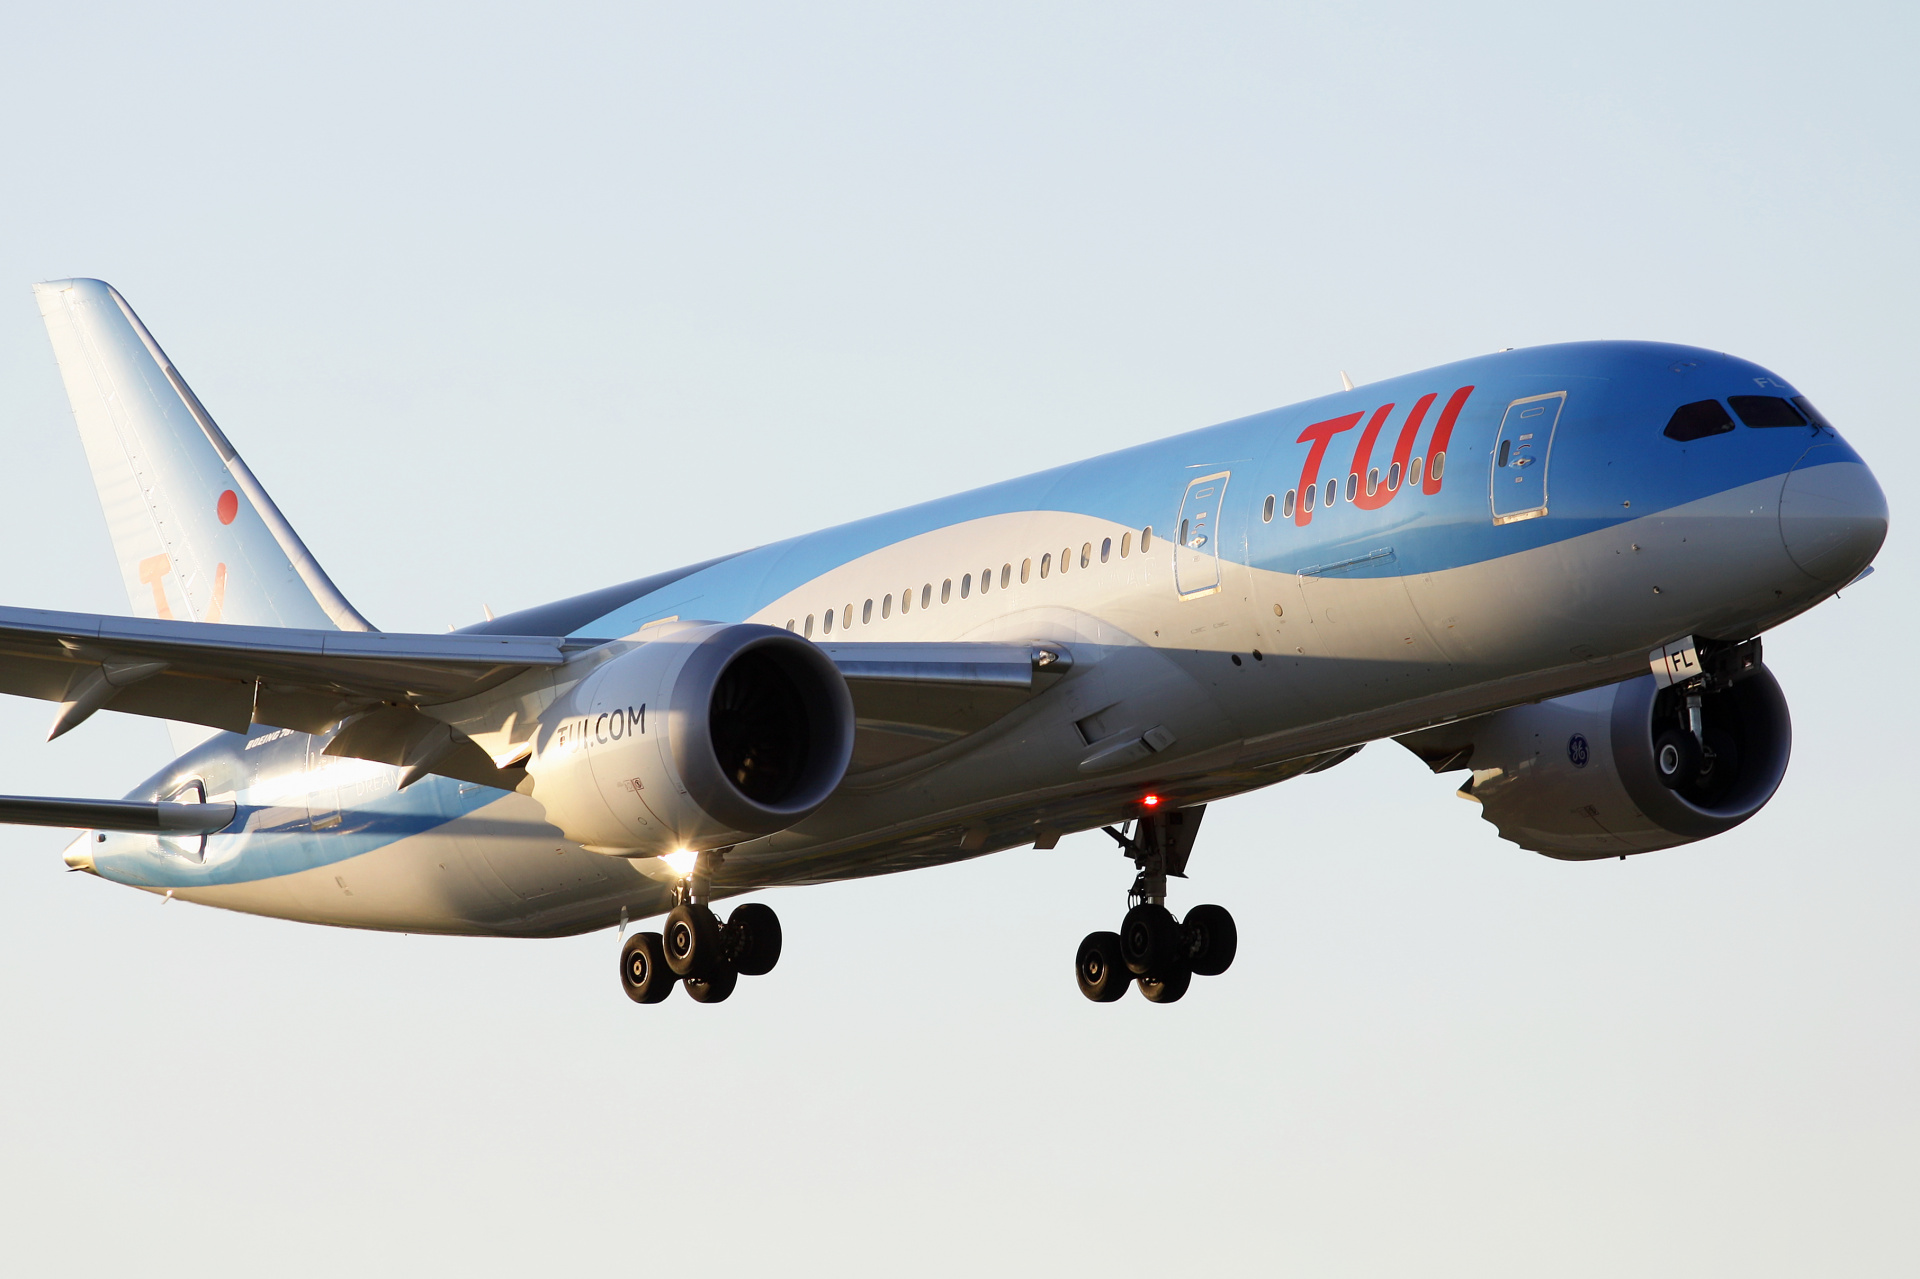 PH-TFL, TUI fly Netherlands (Aircraft » EPWA Spotting » Boeing 787-8 Dreamliner » TUI fly)